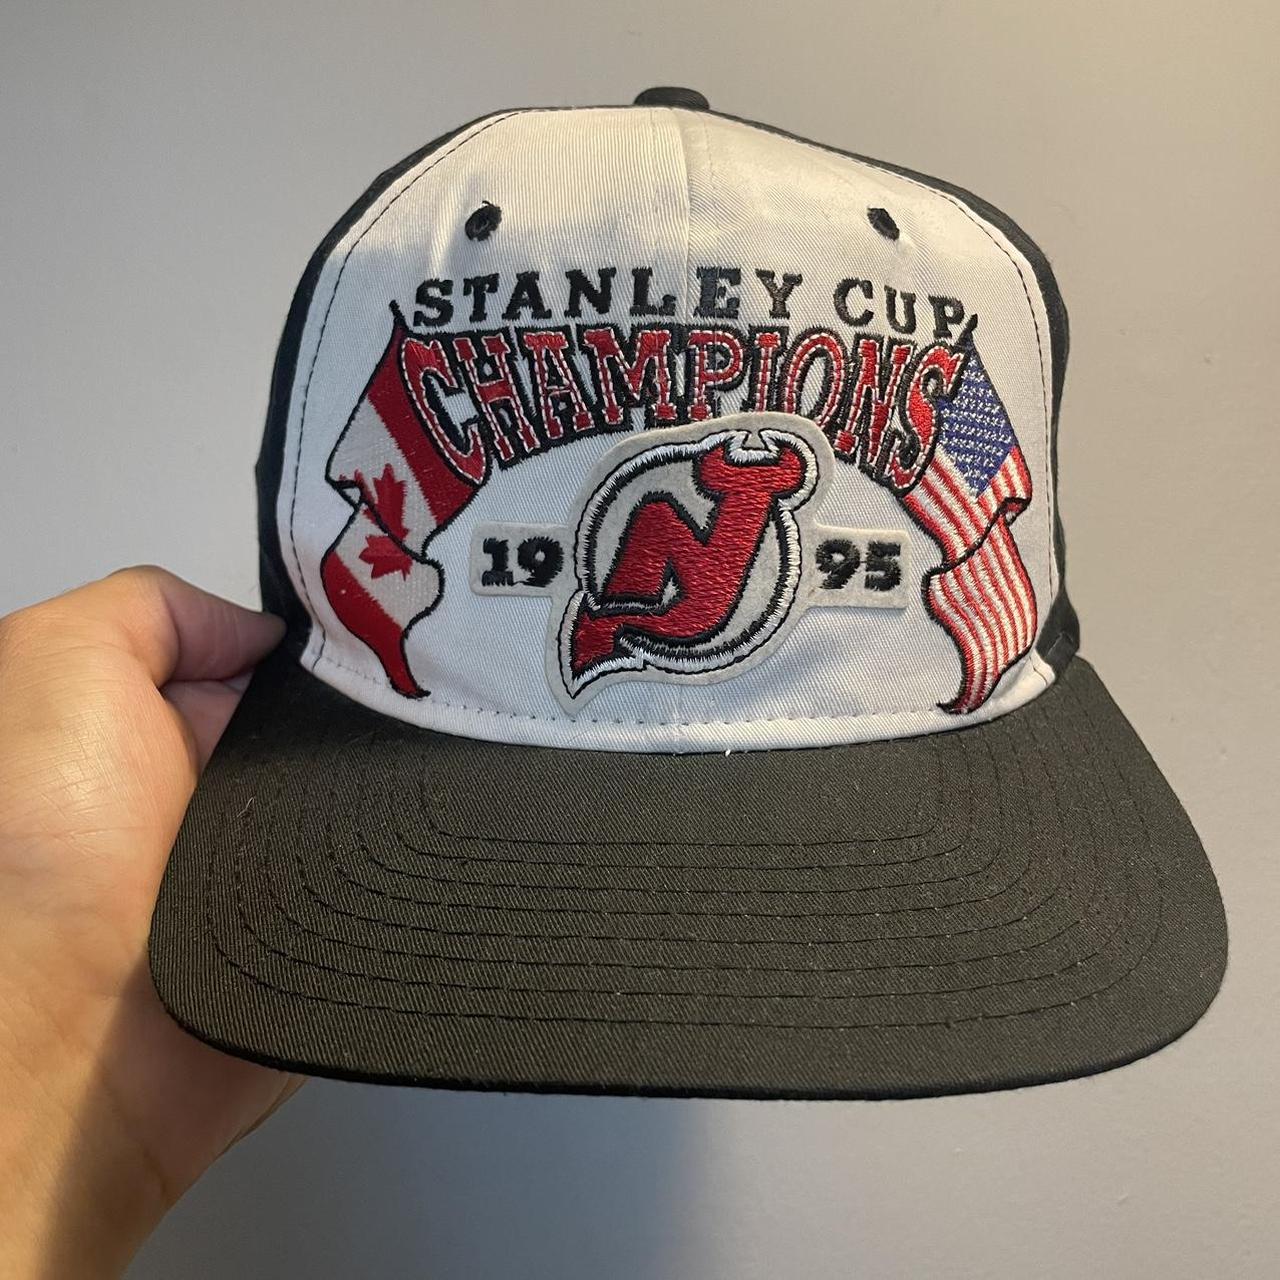 New Jersey Devils 1995 Stanley Cup Champions Vintage Starter